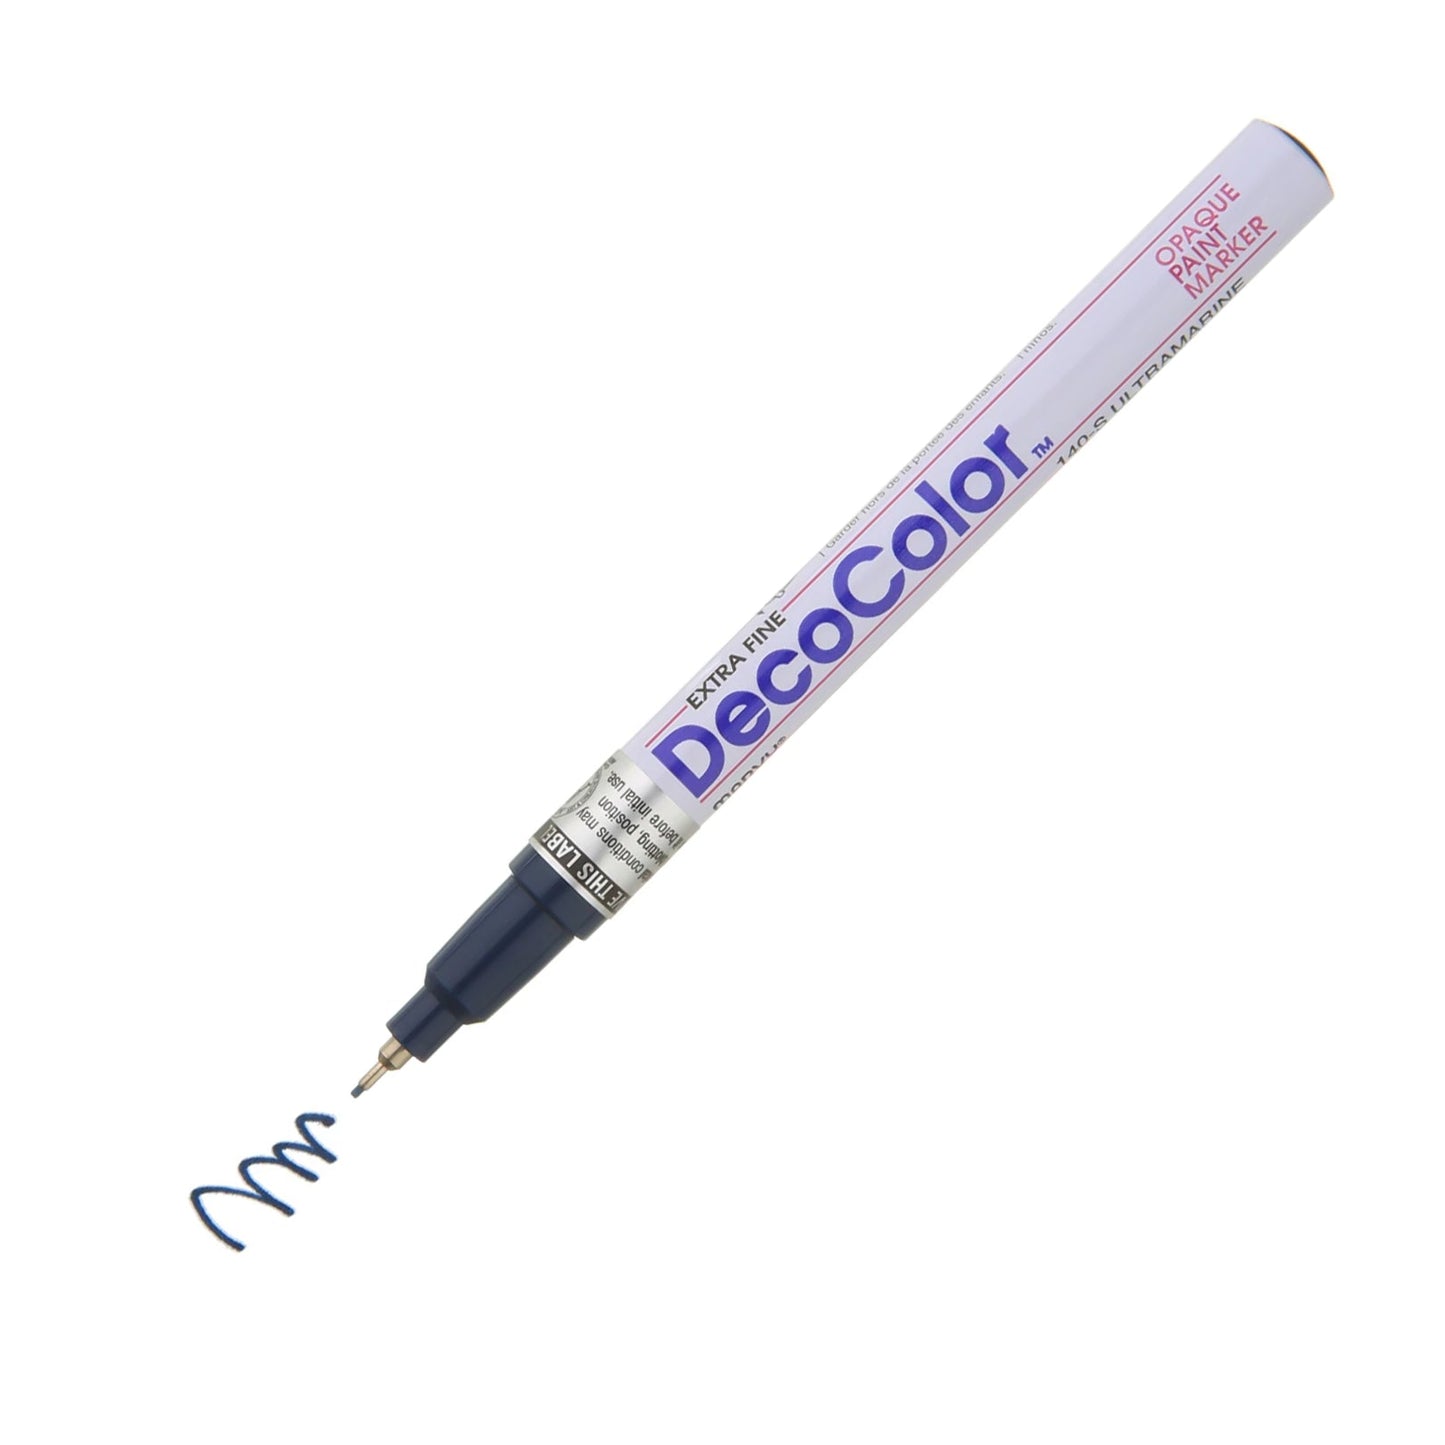 Pennarello a vernice Decocolor, punta Specialtech extra fine da 0,8 mm